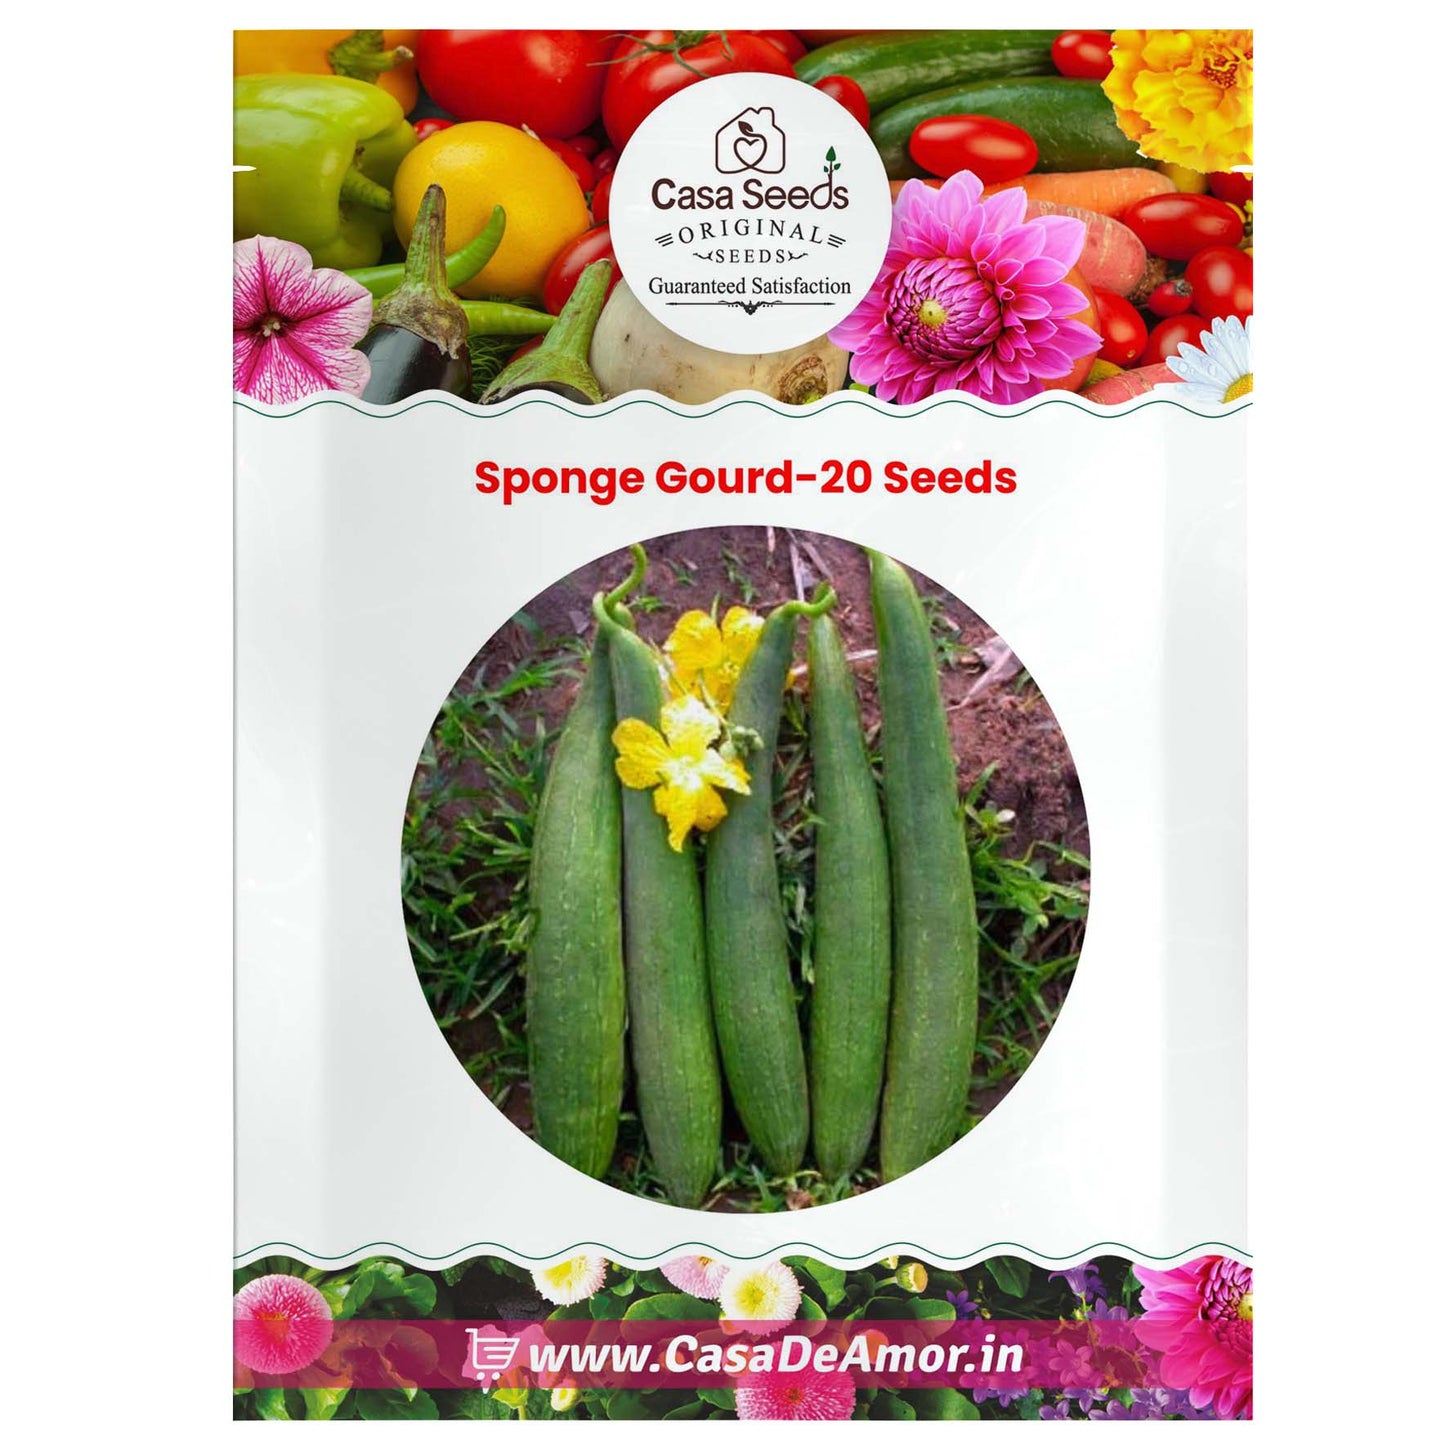 Sponge Gourd-20 Seeds